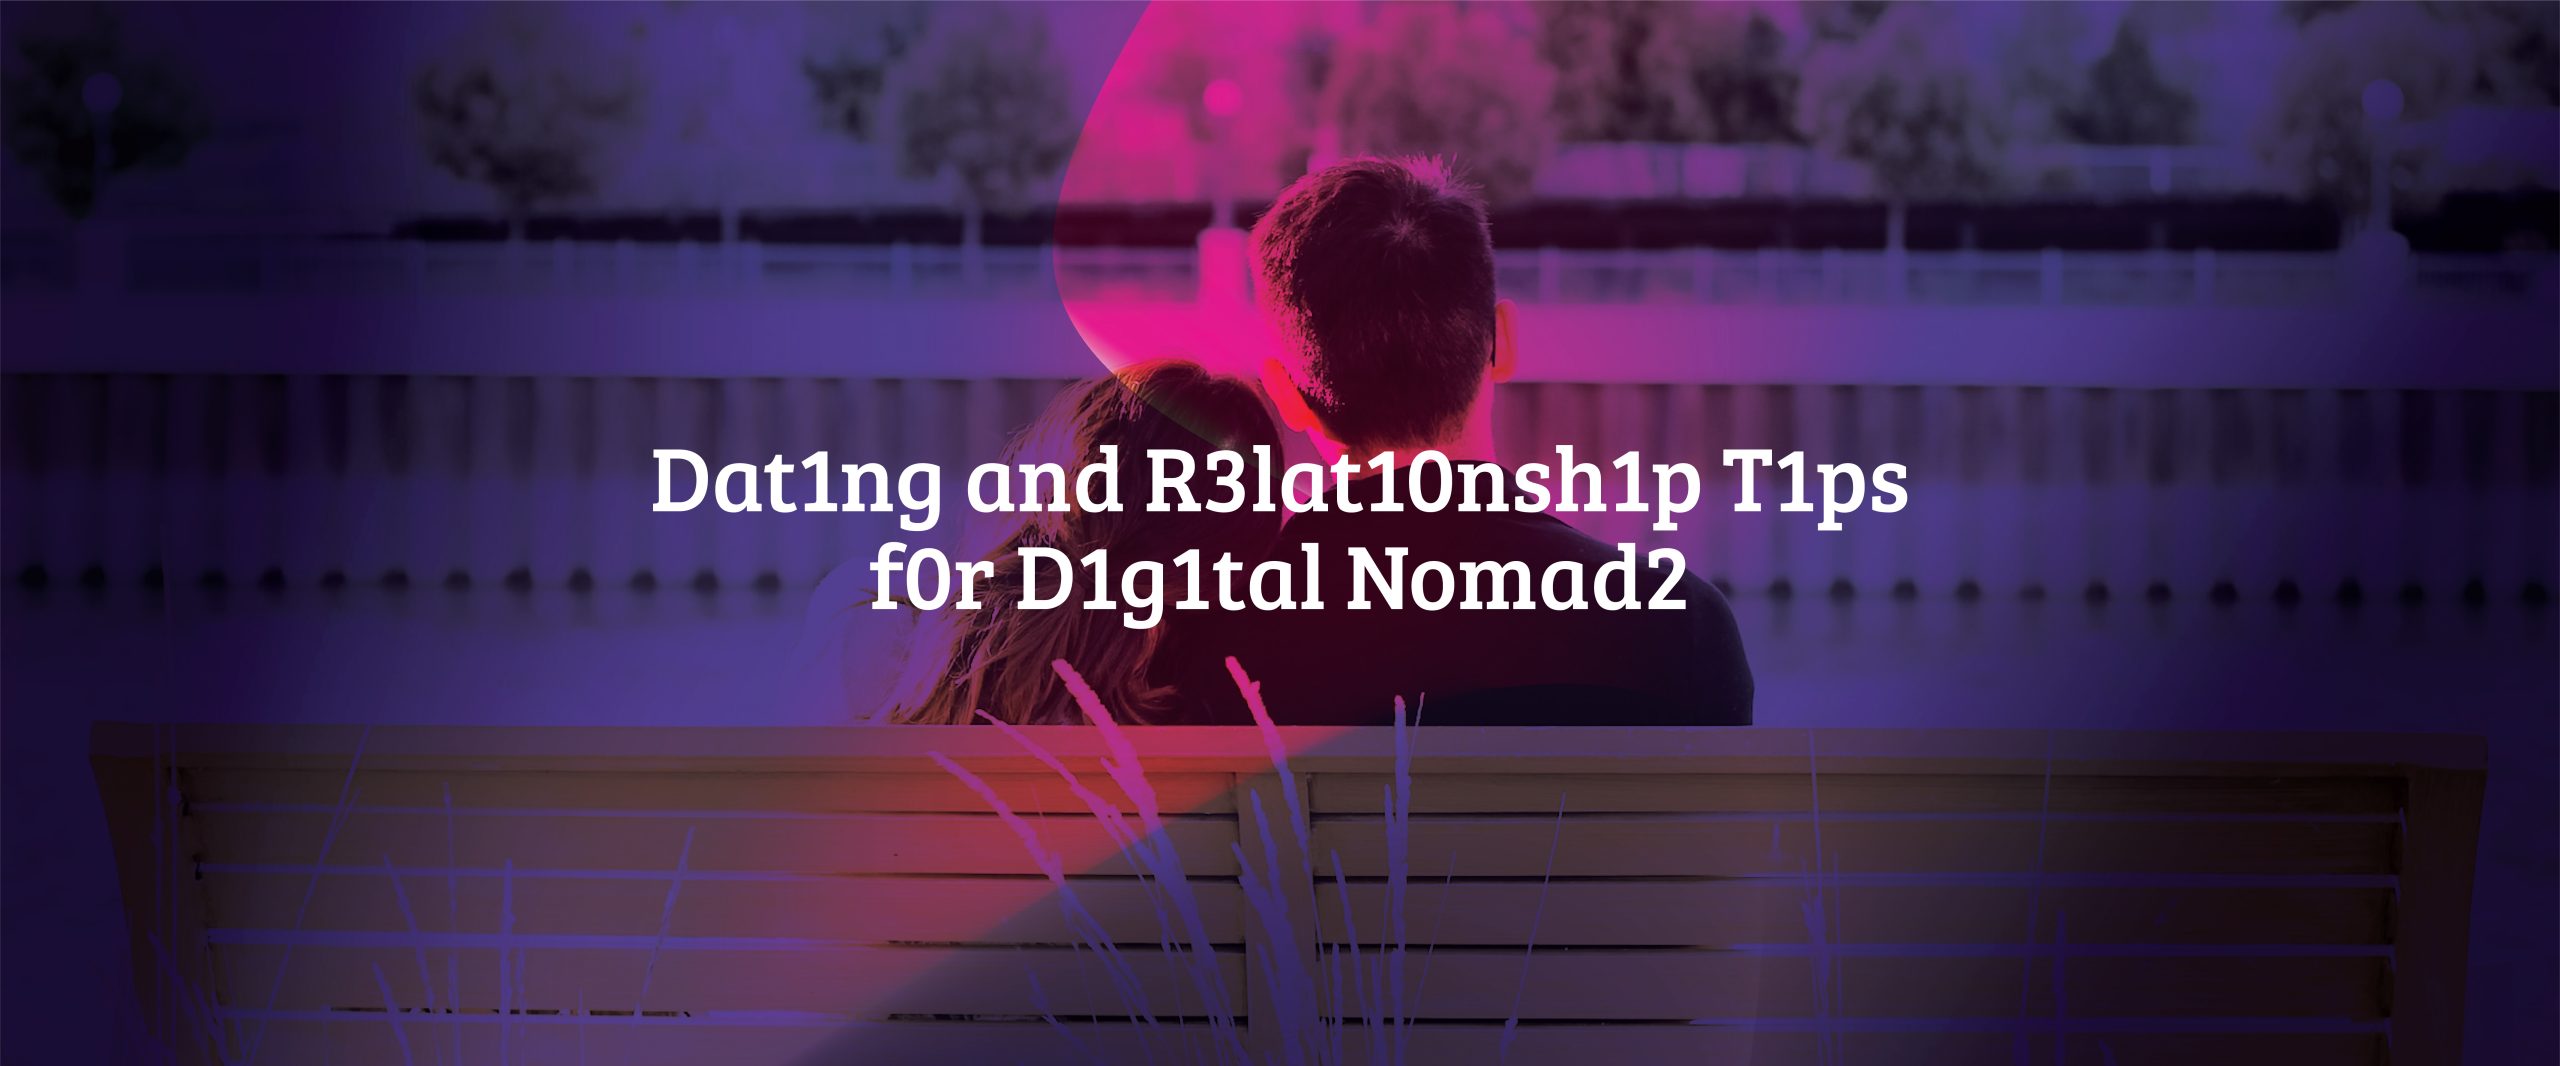 Dating and Relationship Tips for Digital Nomads